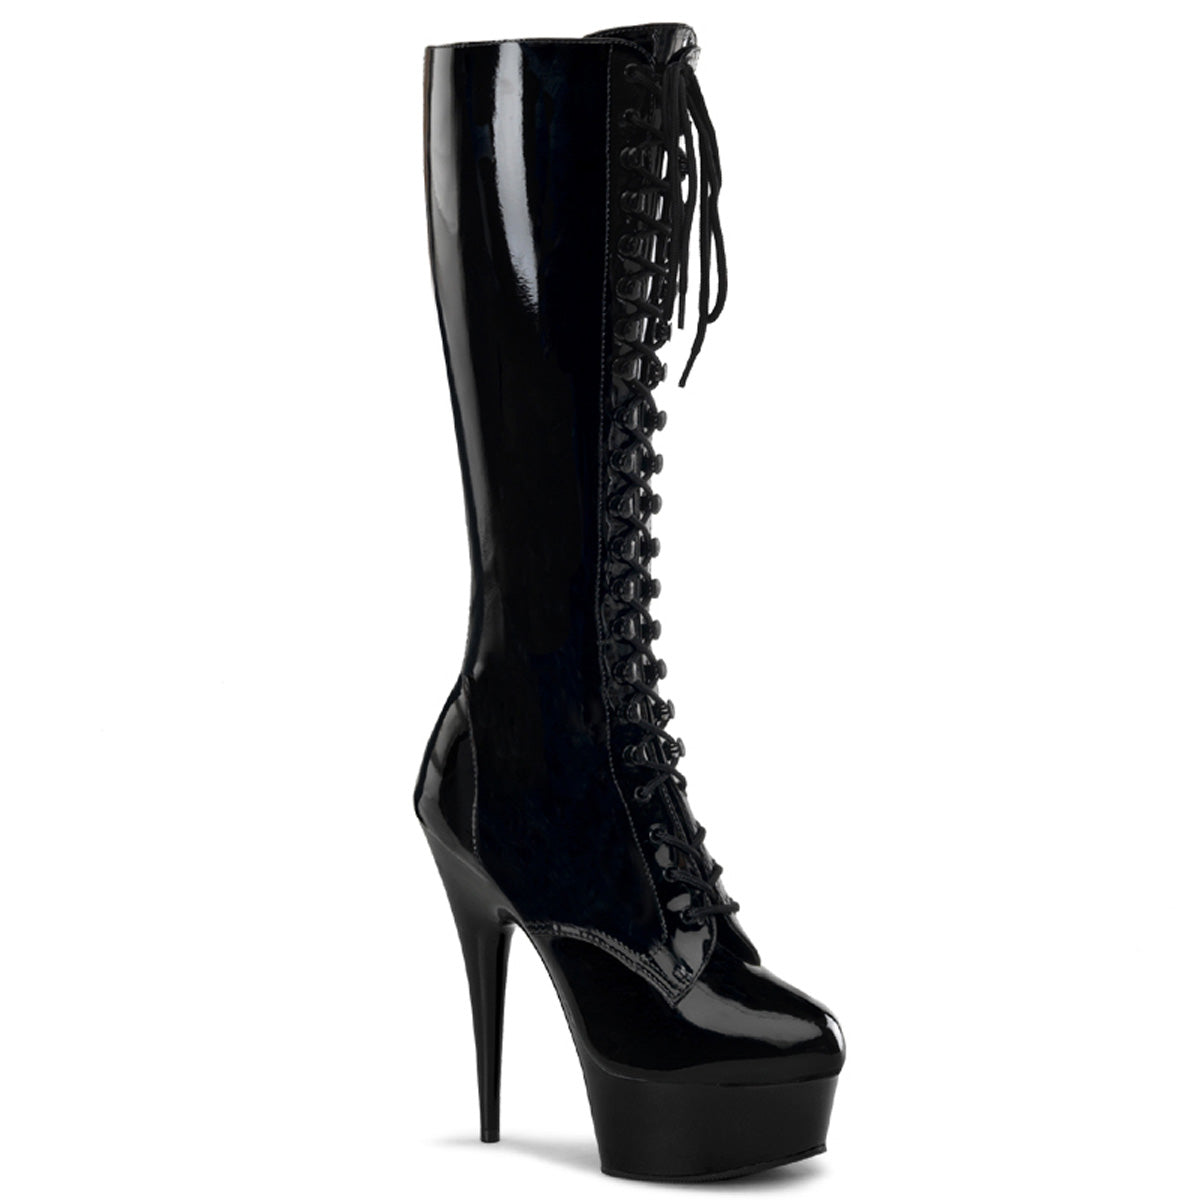 DELIGHT-2023 6" Heel Black Stretch Patent Pole Dancer Boots